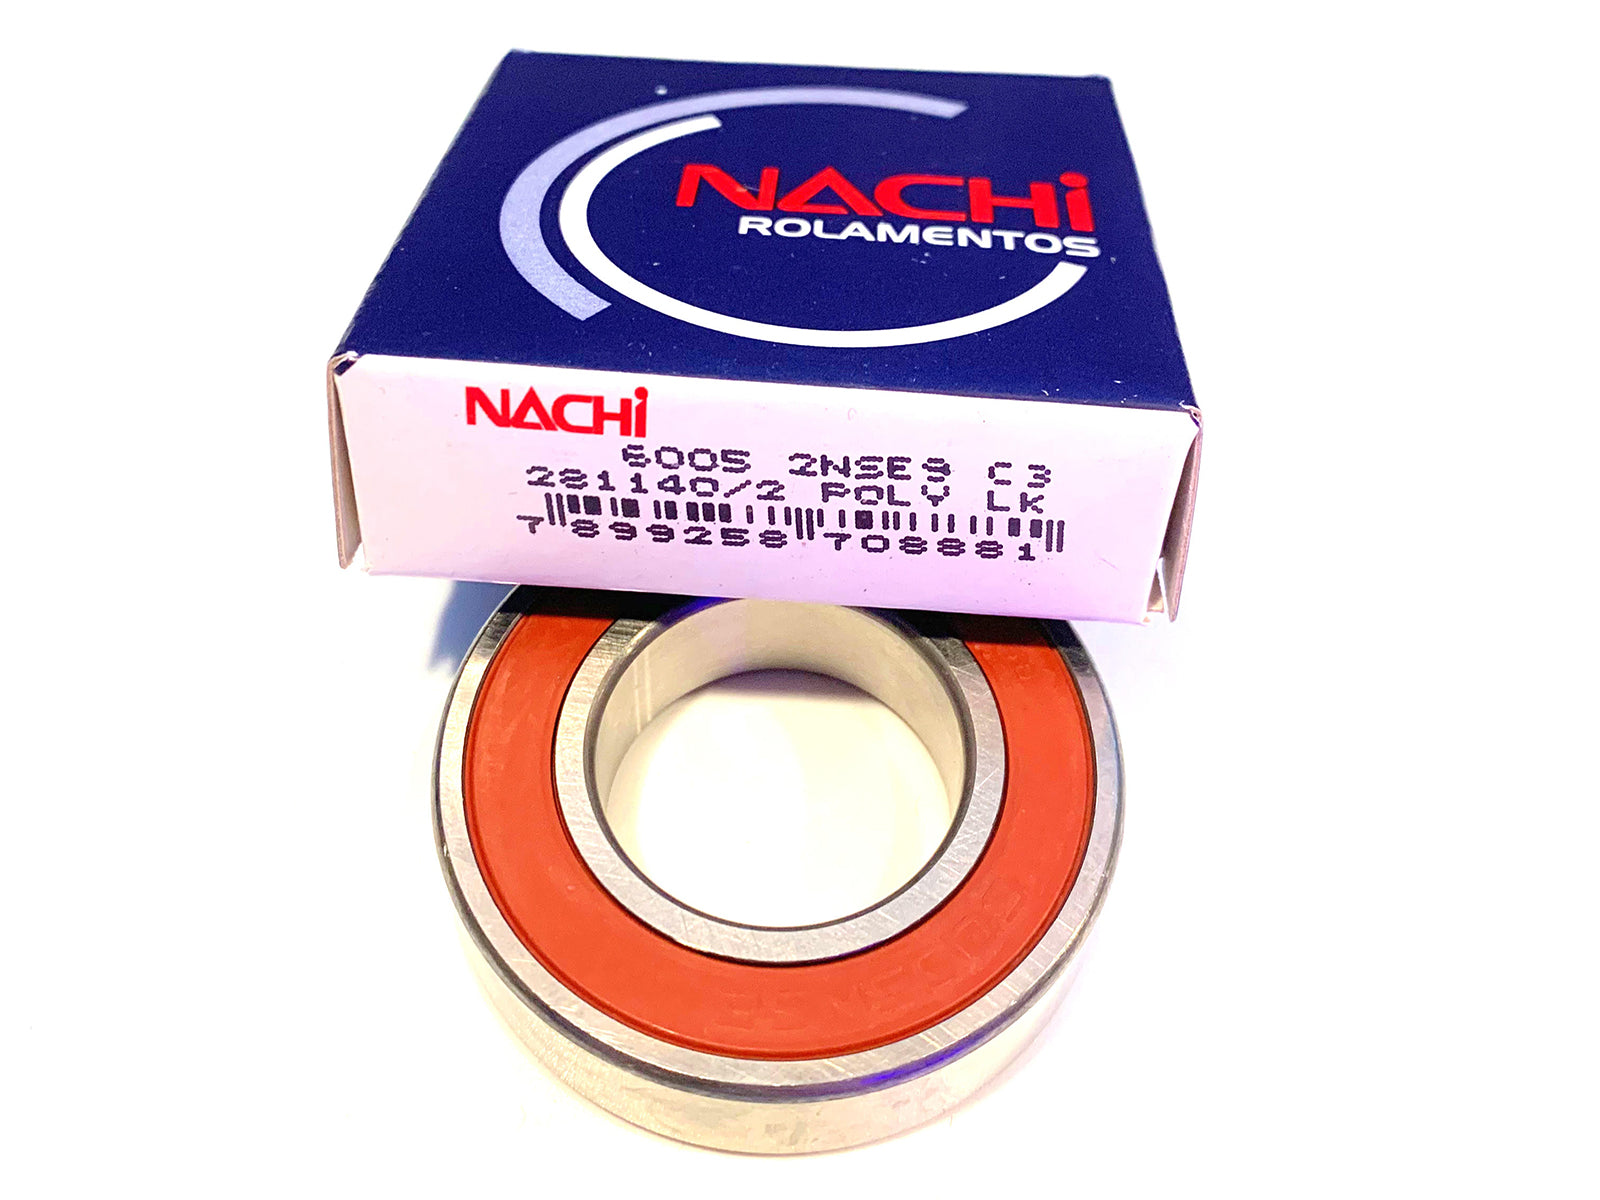 6005-2NSE9 C3 NACHI Ball Bearing - ppdistributors